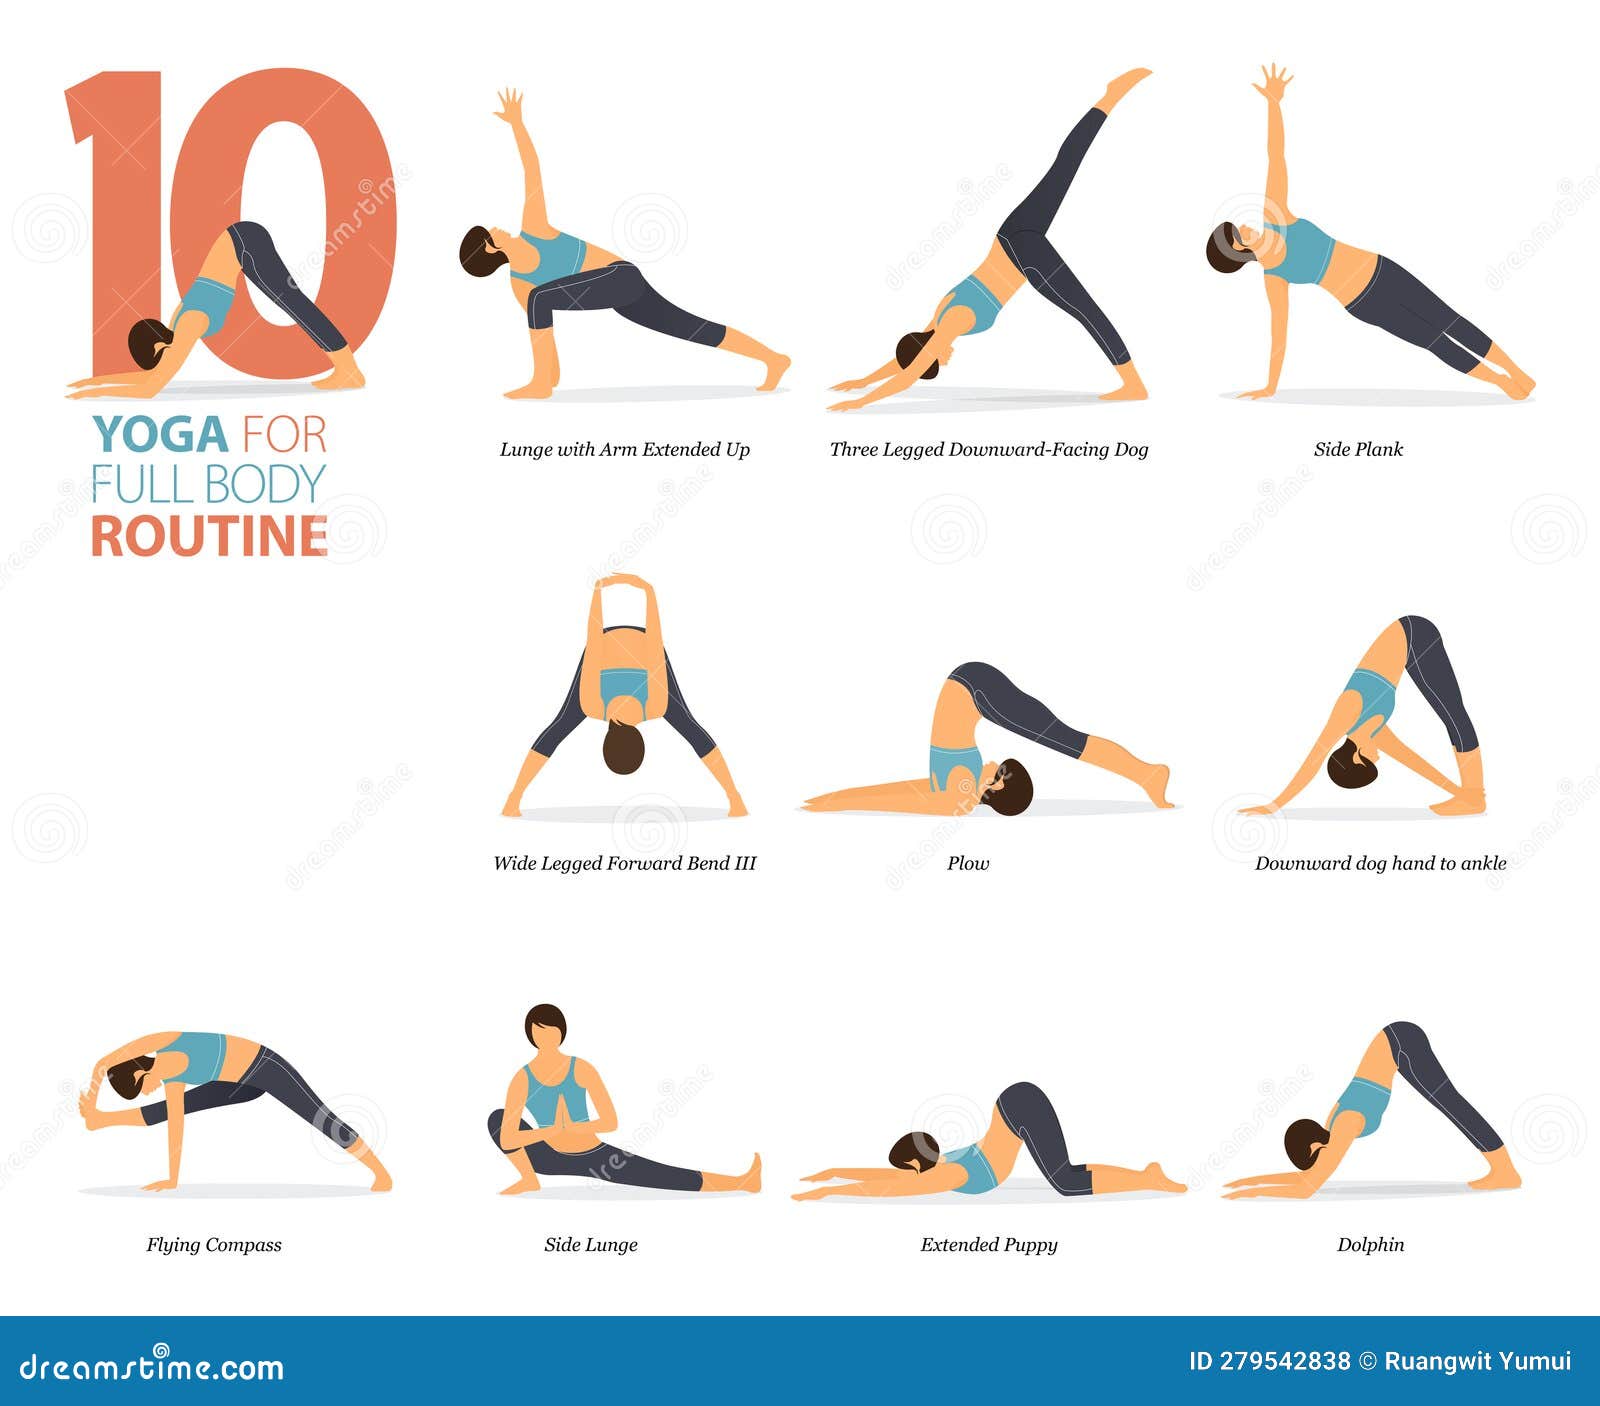 Total Body Yoga 60 min Full Body Yoga Postures | Yoga with Melissa 480